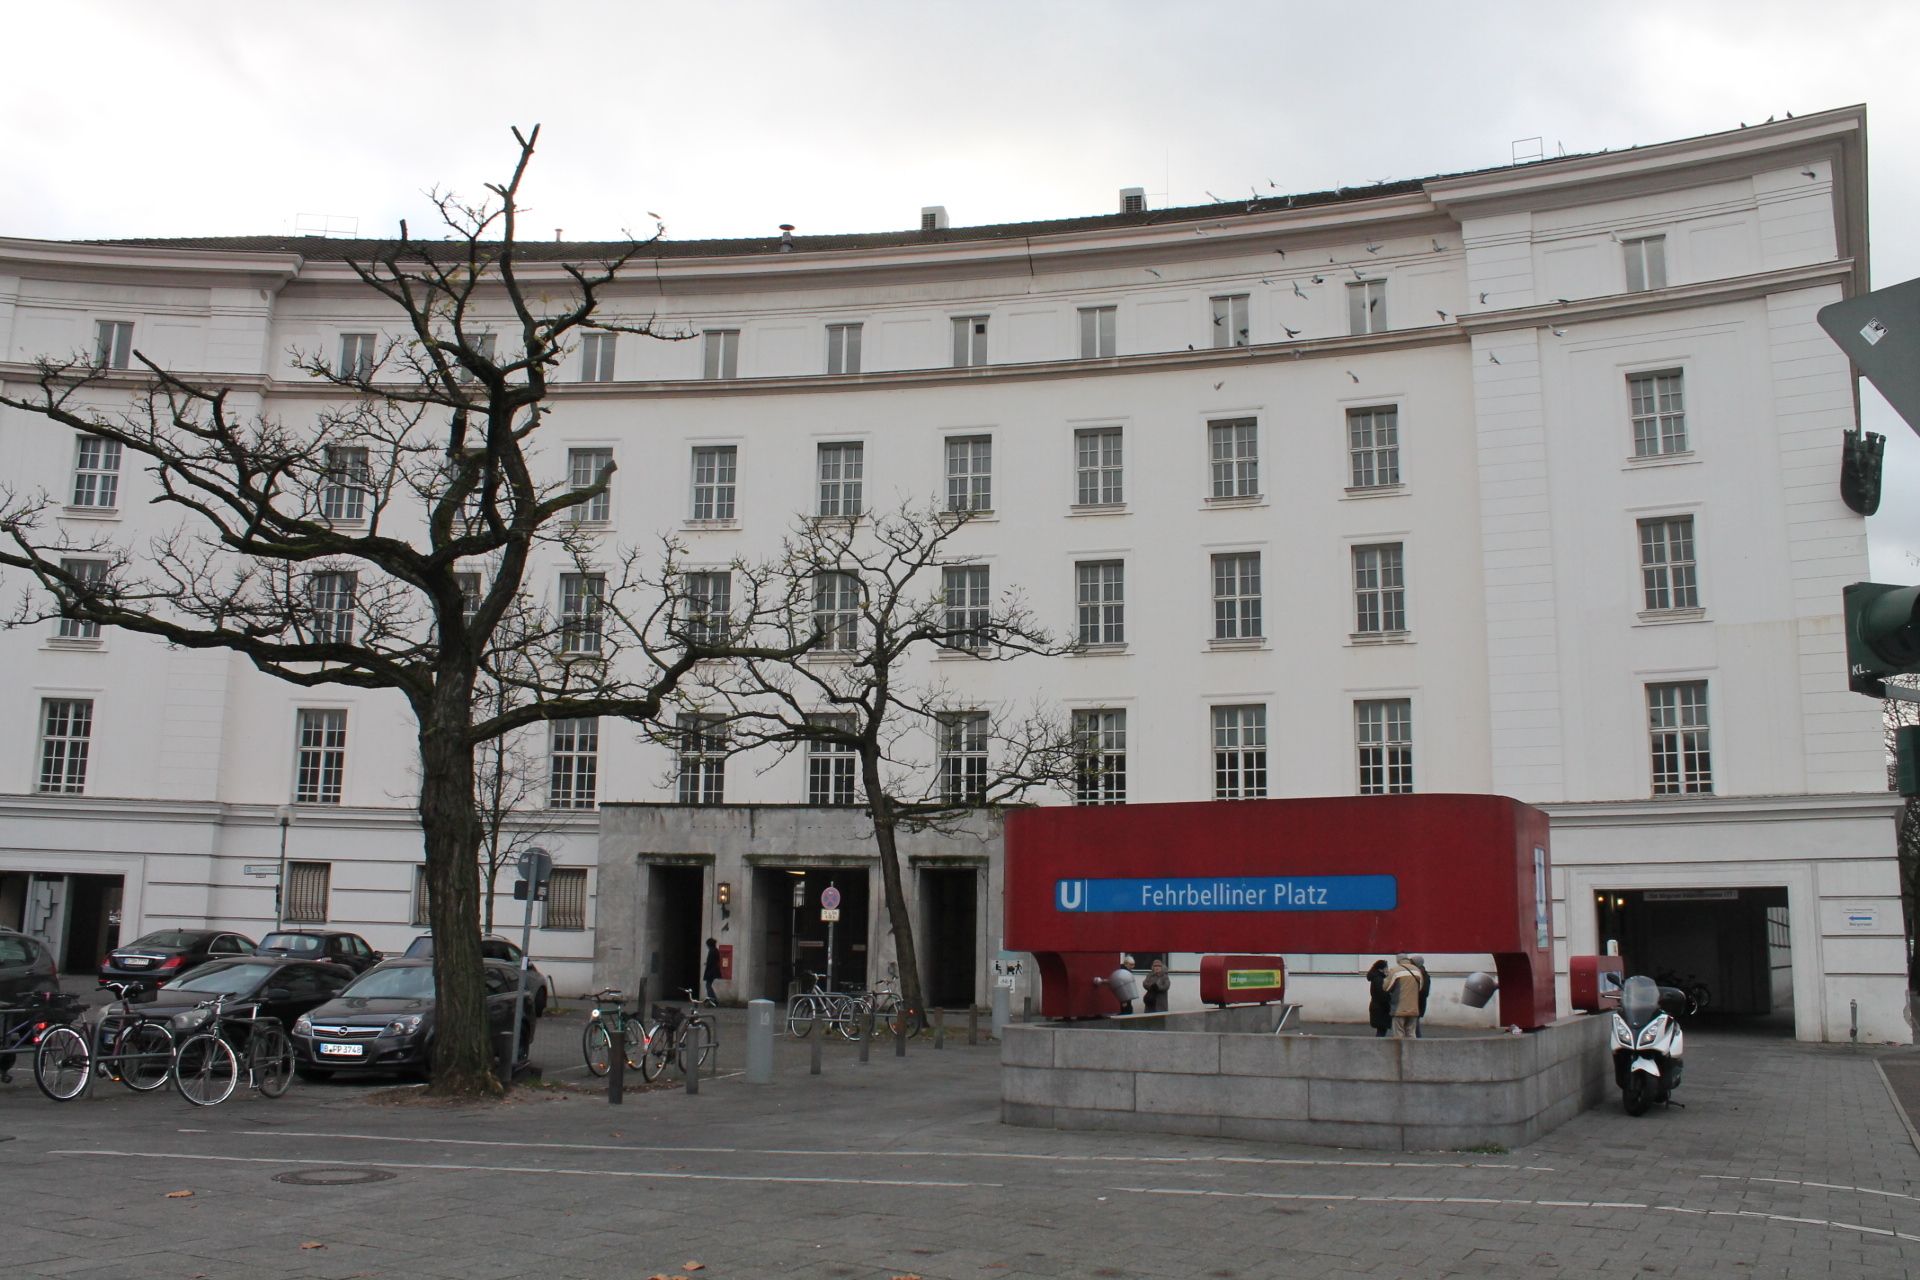 Fehrbelliner Platz 4, ehem. Rathaus Wilmersdorf, Kiezspaziergang 12.12.2015